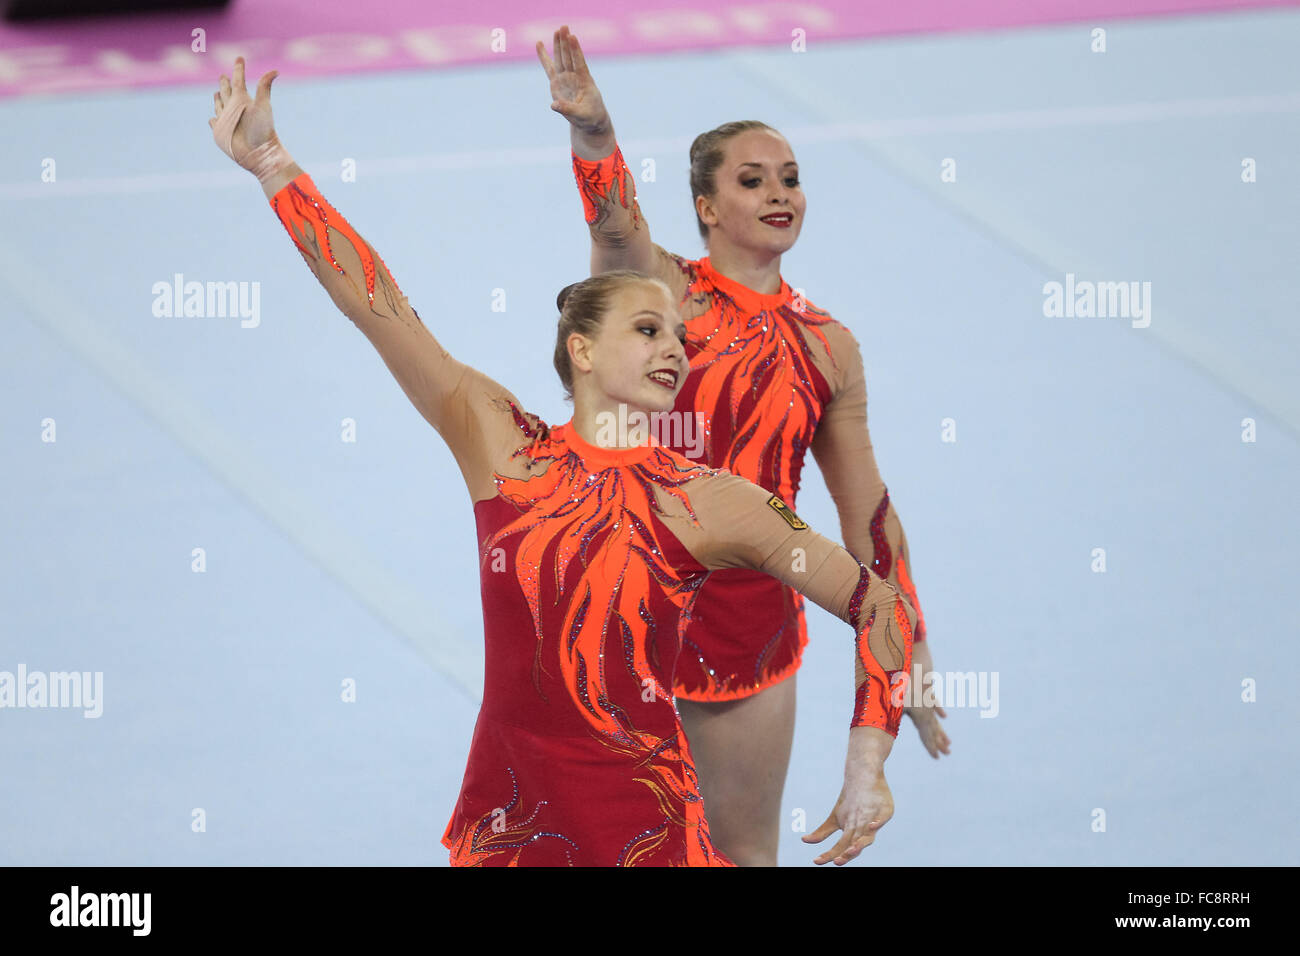 Germany. Women's Group All-Around Acrobatic Gymnastics. National Gymnastics Arena. Baku2015. 1st European Games. Baku. Azerbaijan. 19/06/2015. Stock Photo